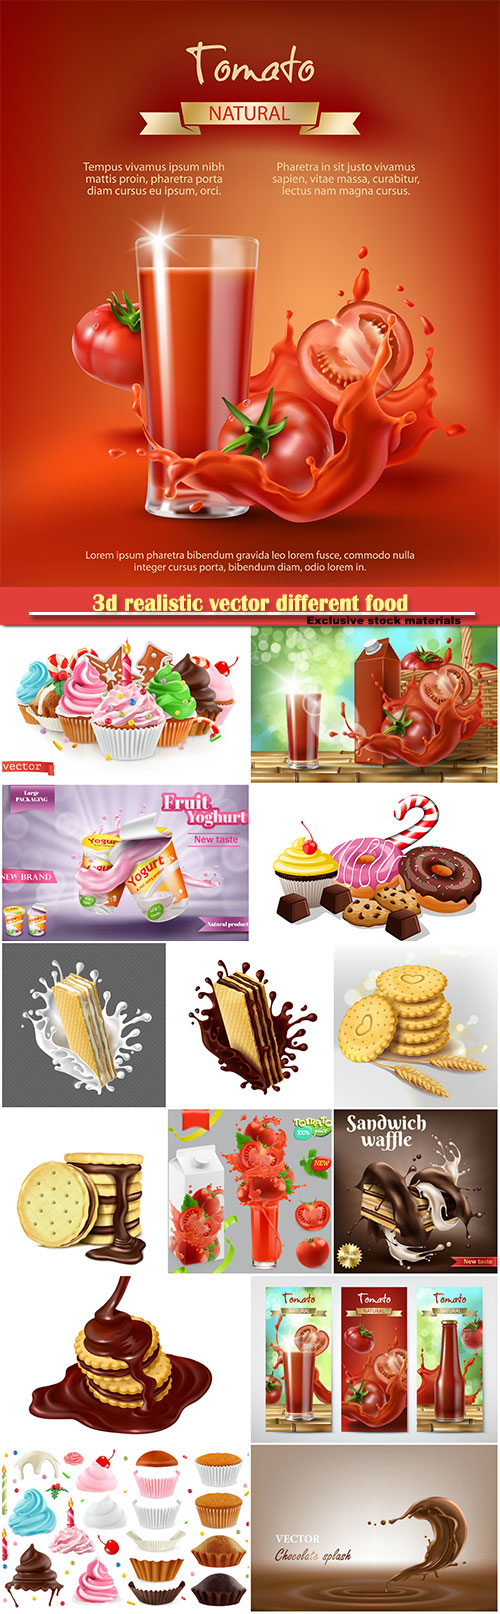 3d realistic vector different food, sweet dessert, cake, cupcake, chocolate, juice